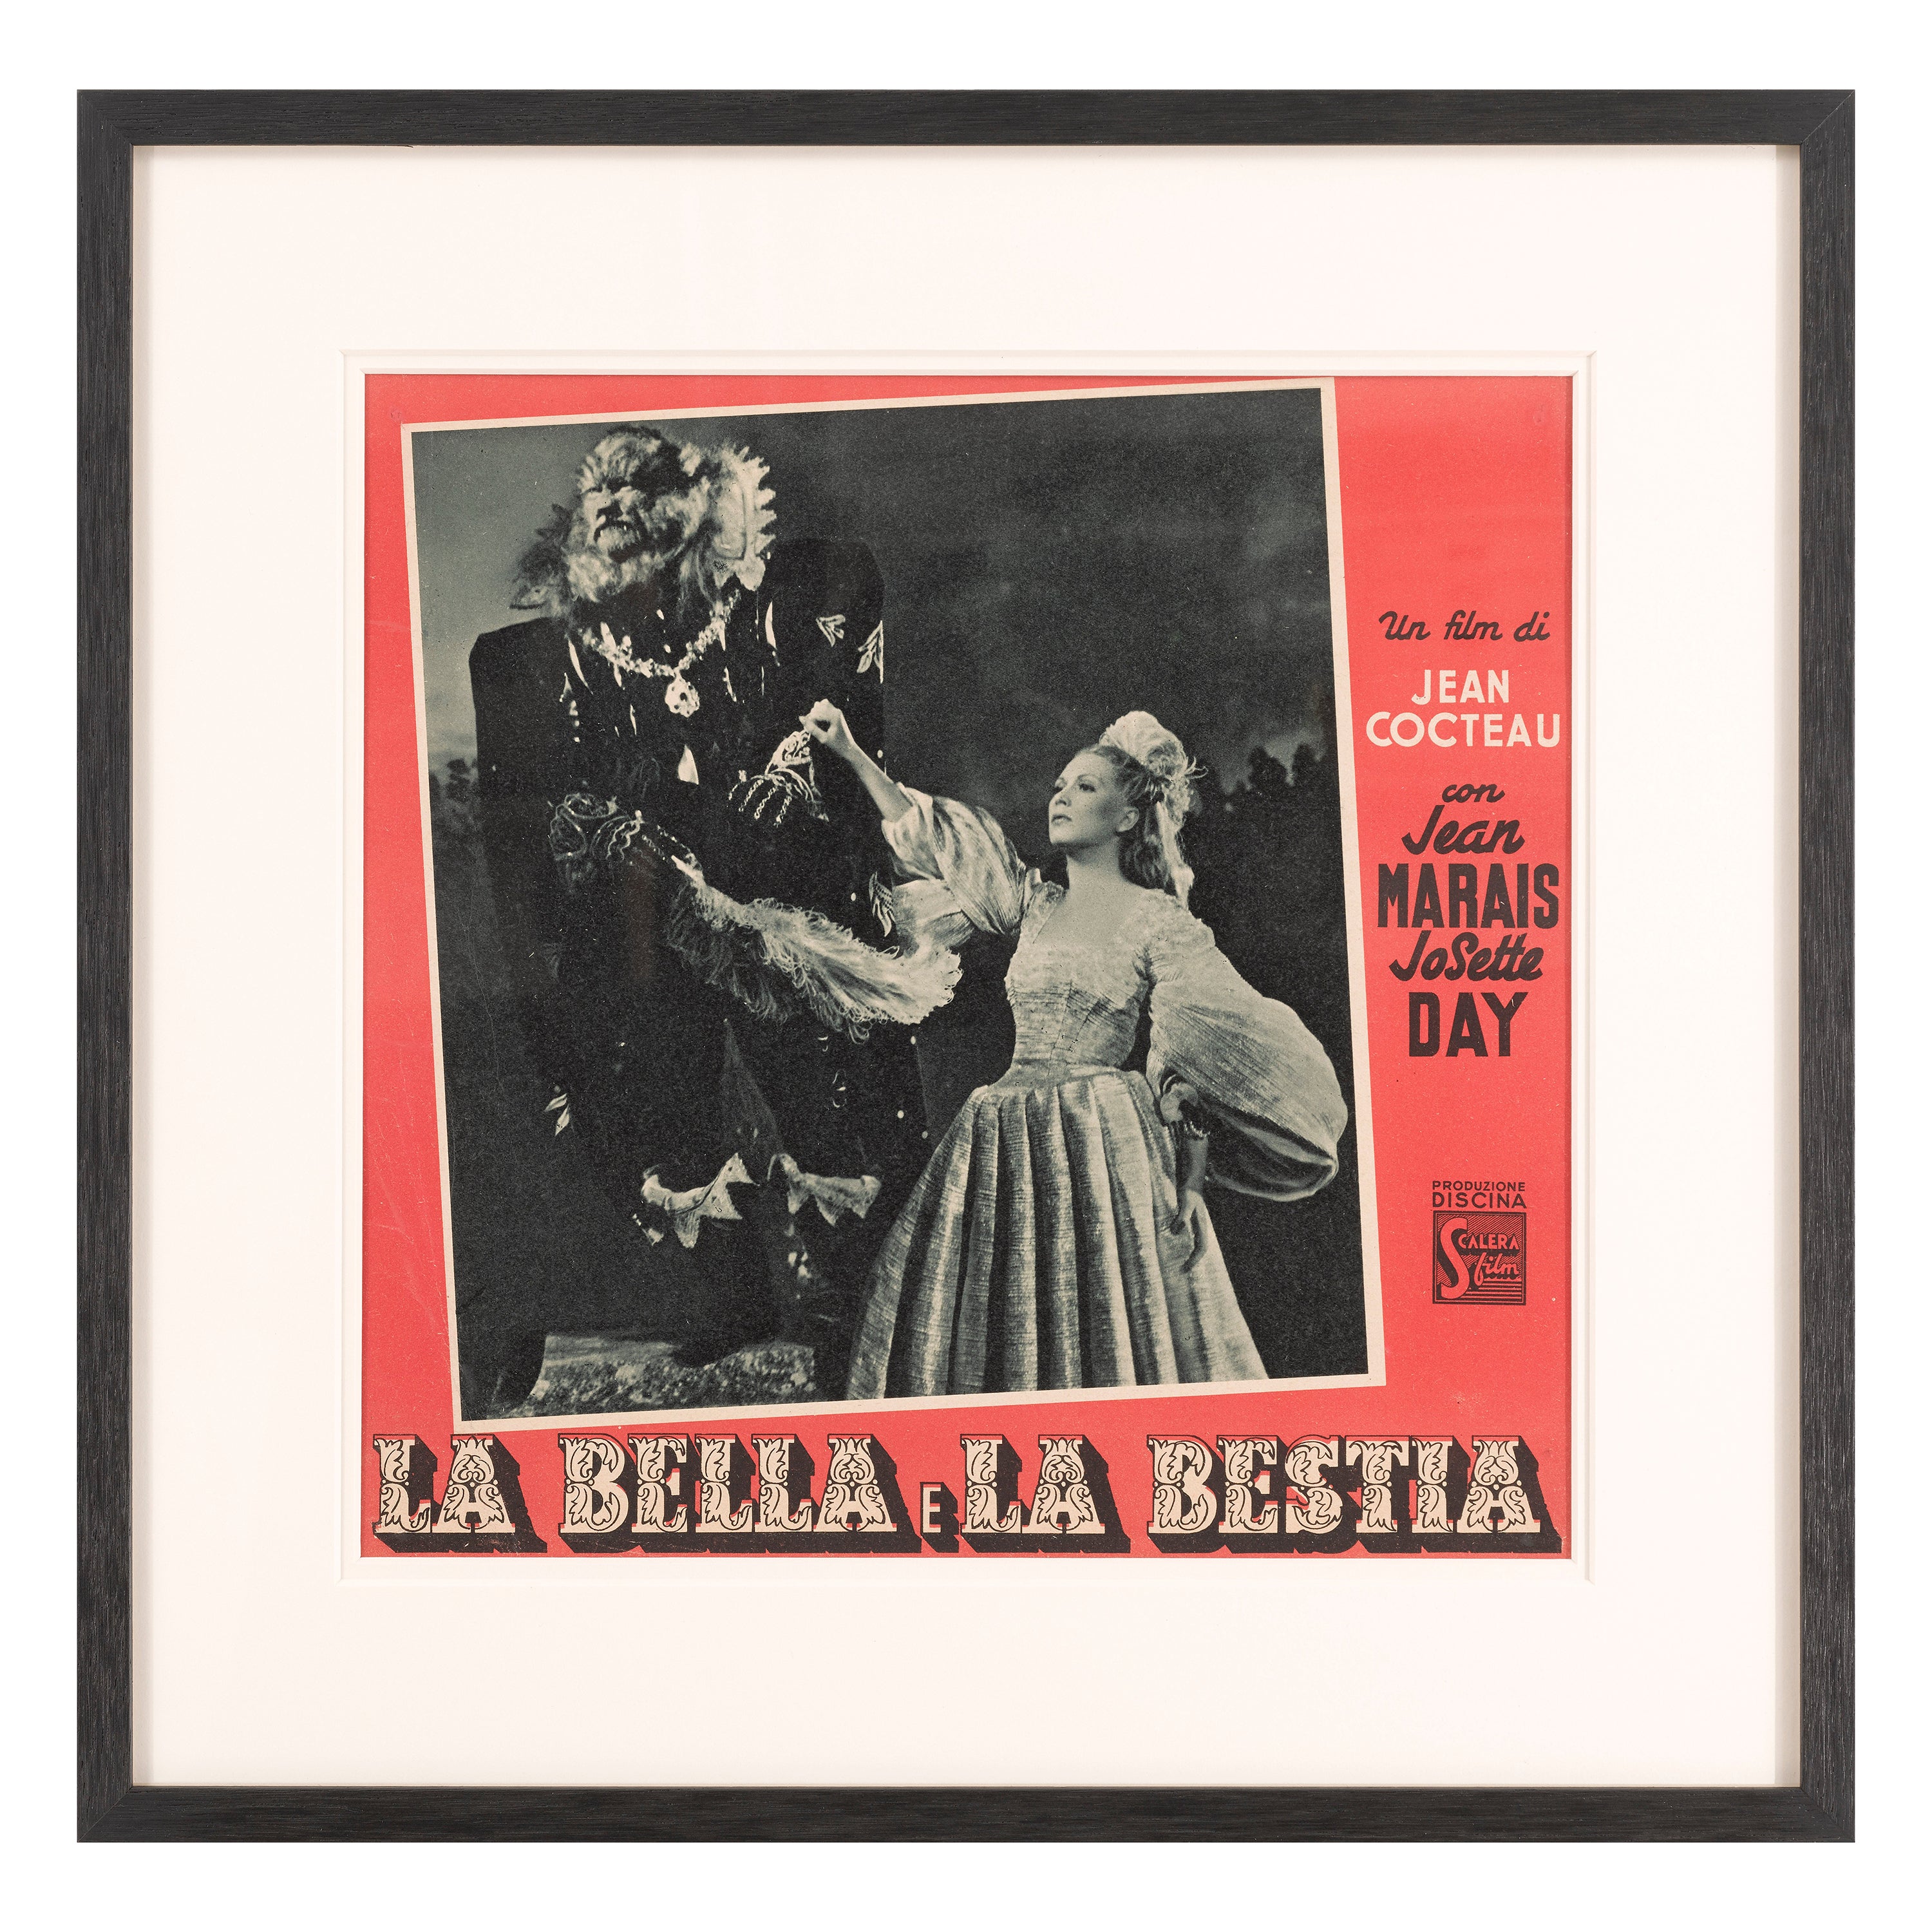 La Belle Et La Bete or Beauty and the Beast For Sale